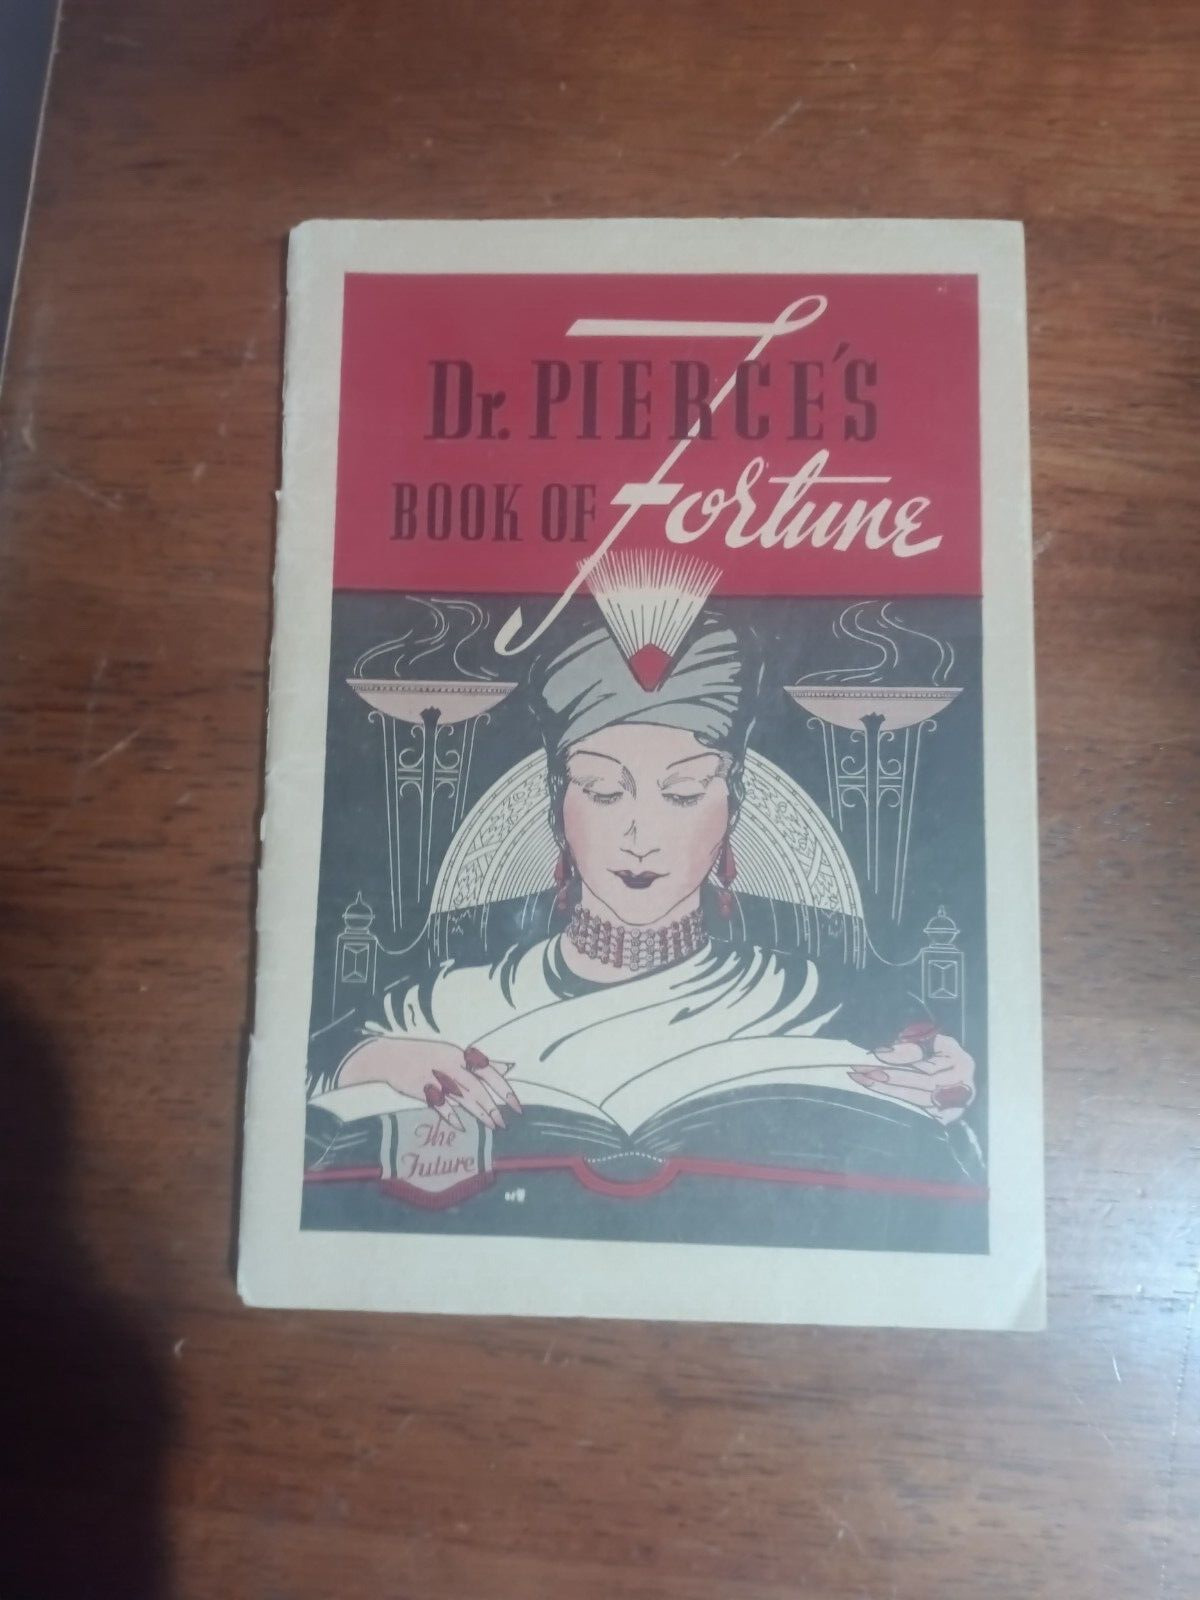 VTG 1930s Dr. Pierce's Book Of Fortune Medical, Astrology & Romance - RARE Find